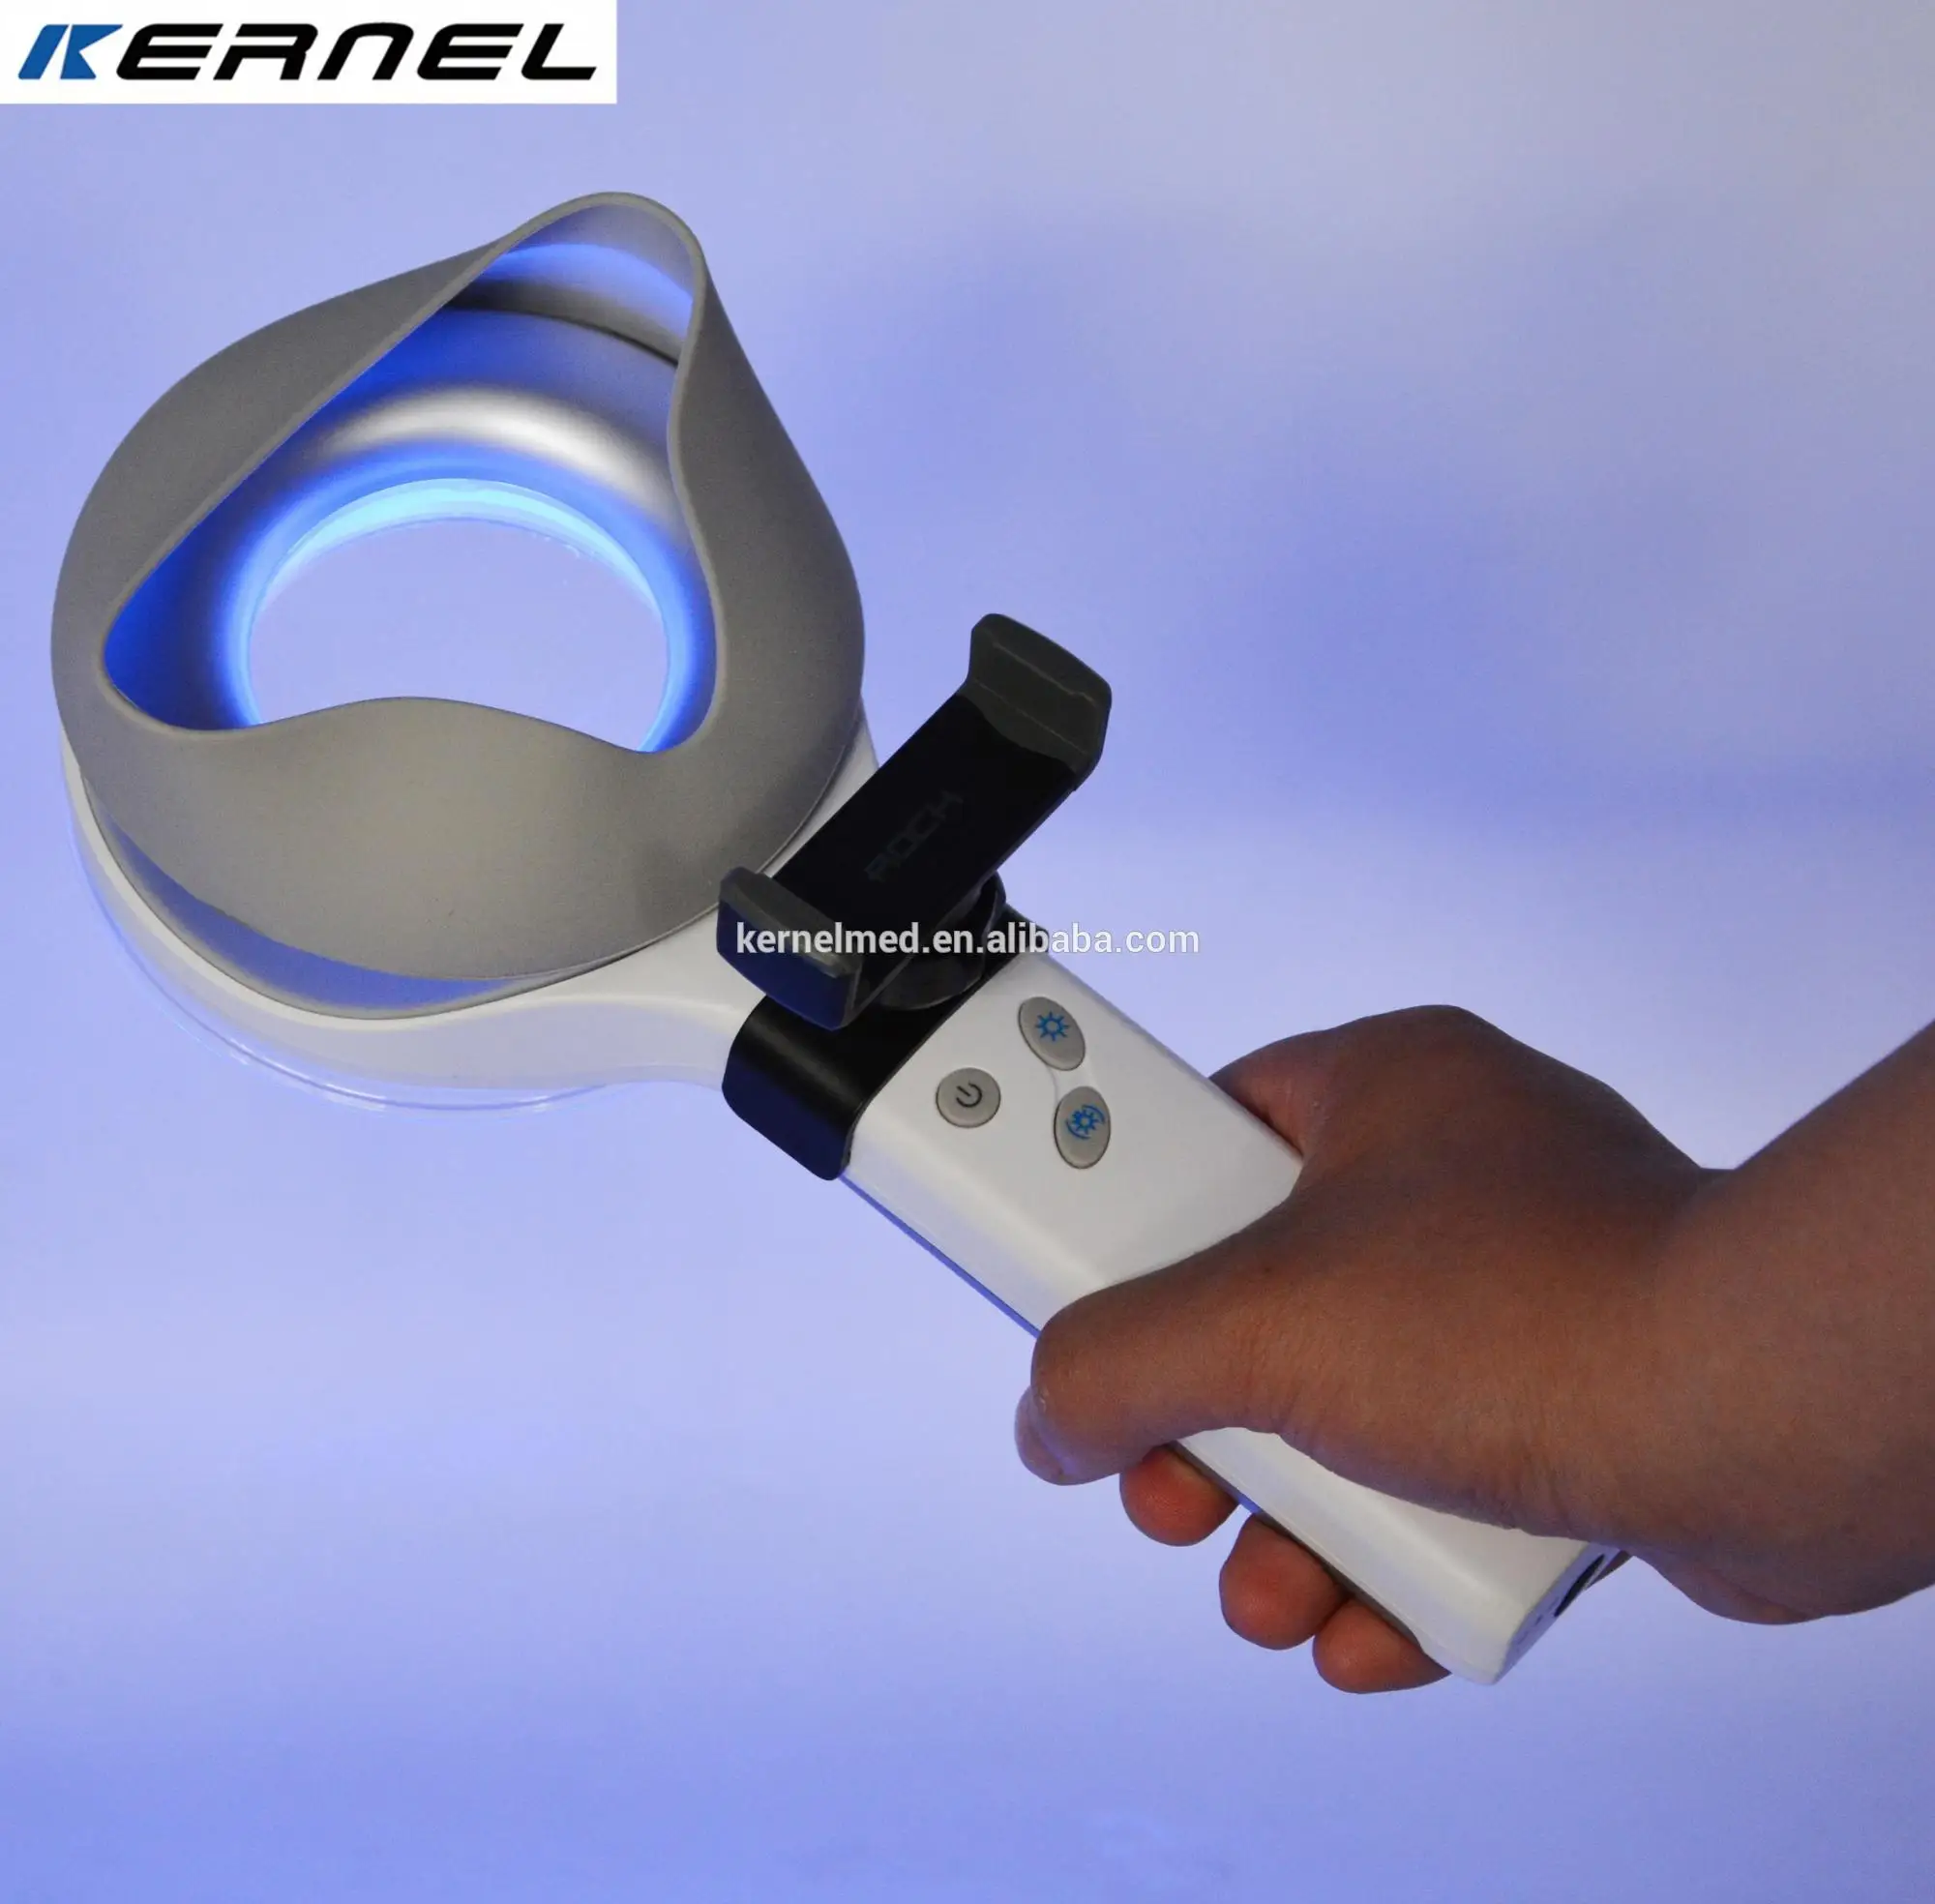 

CE approved led portable digital skin analyzer machine medical woods Lamp skin analysis KN-9000B for skin examination